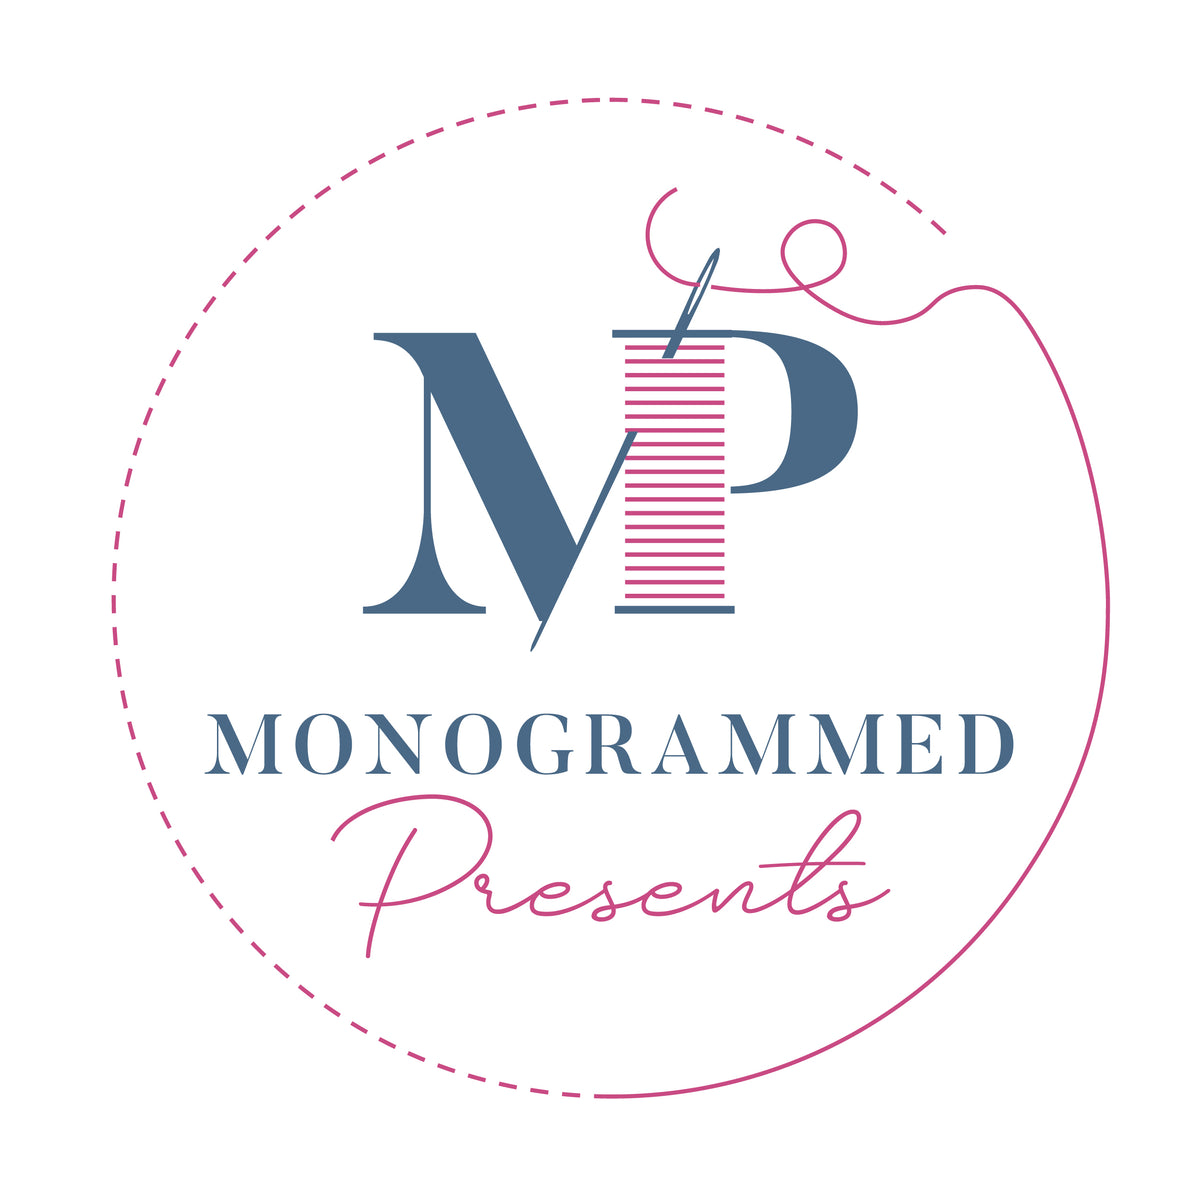 Monogrammed Presents